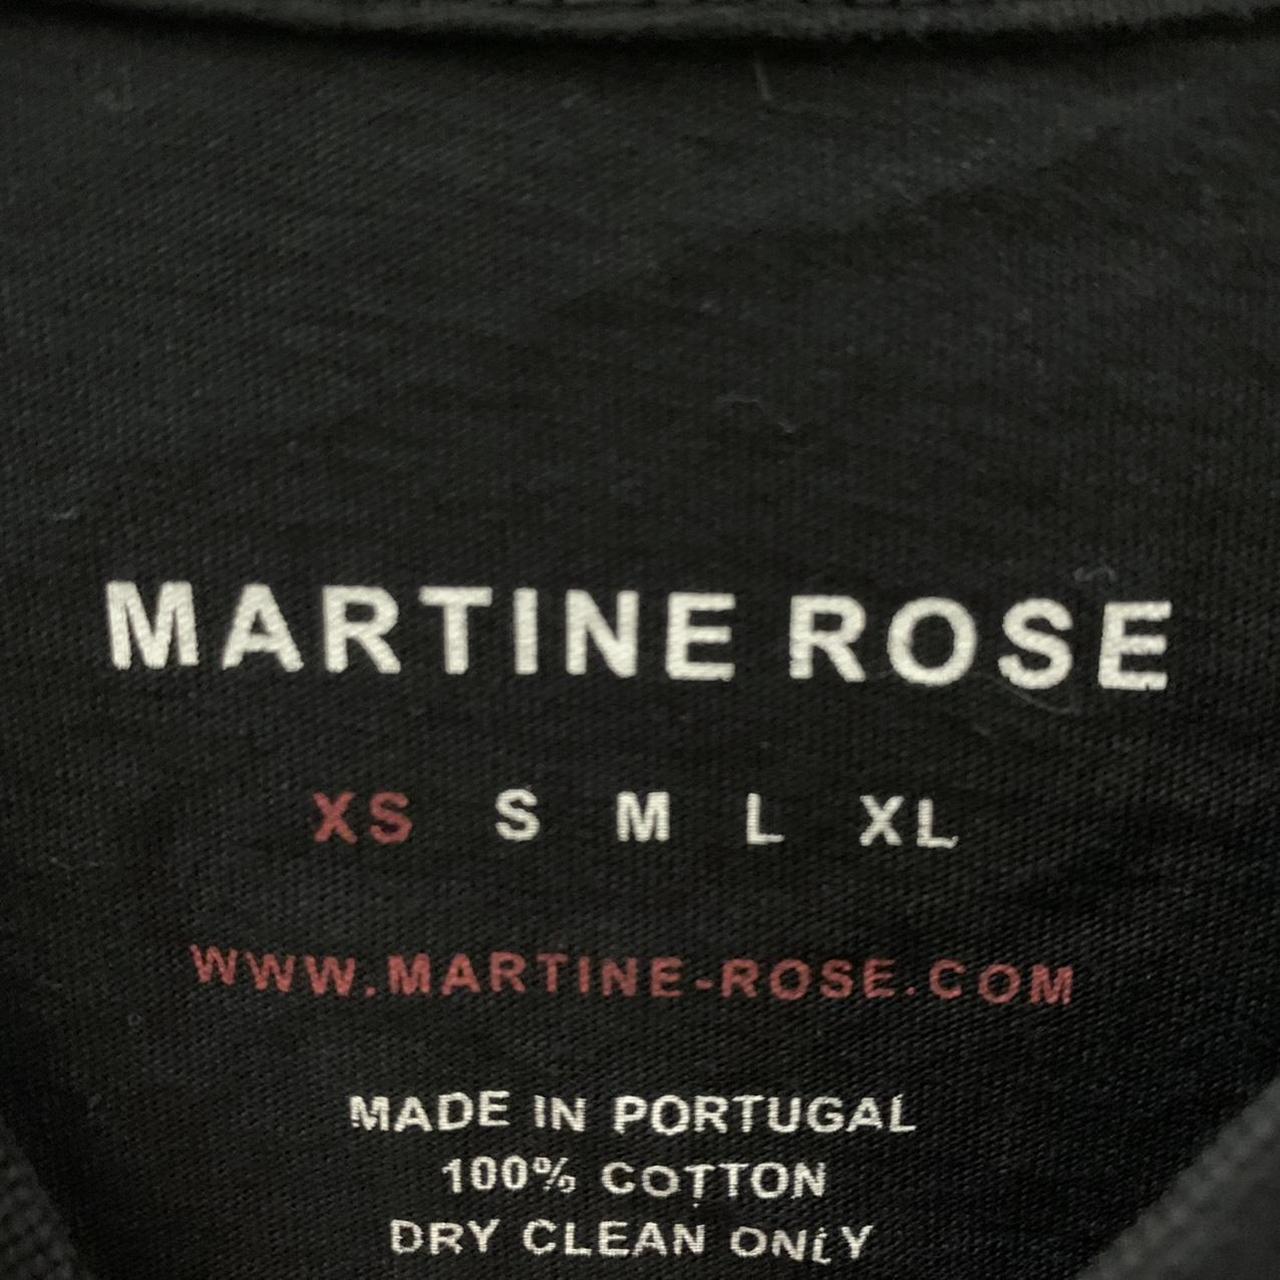 Product Image 3 - Martine Rose Black T-Shirt

Men’s XS